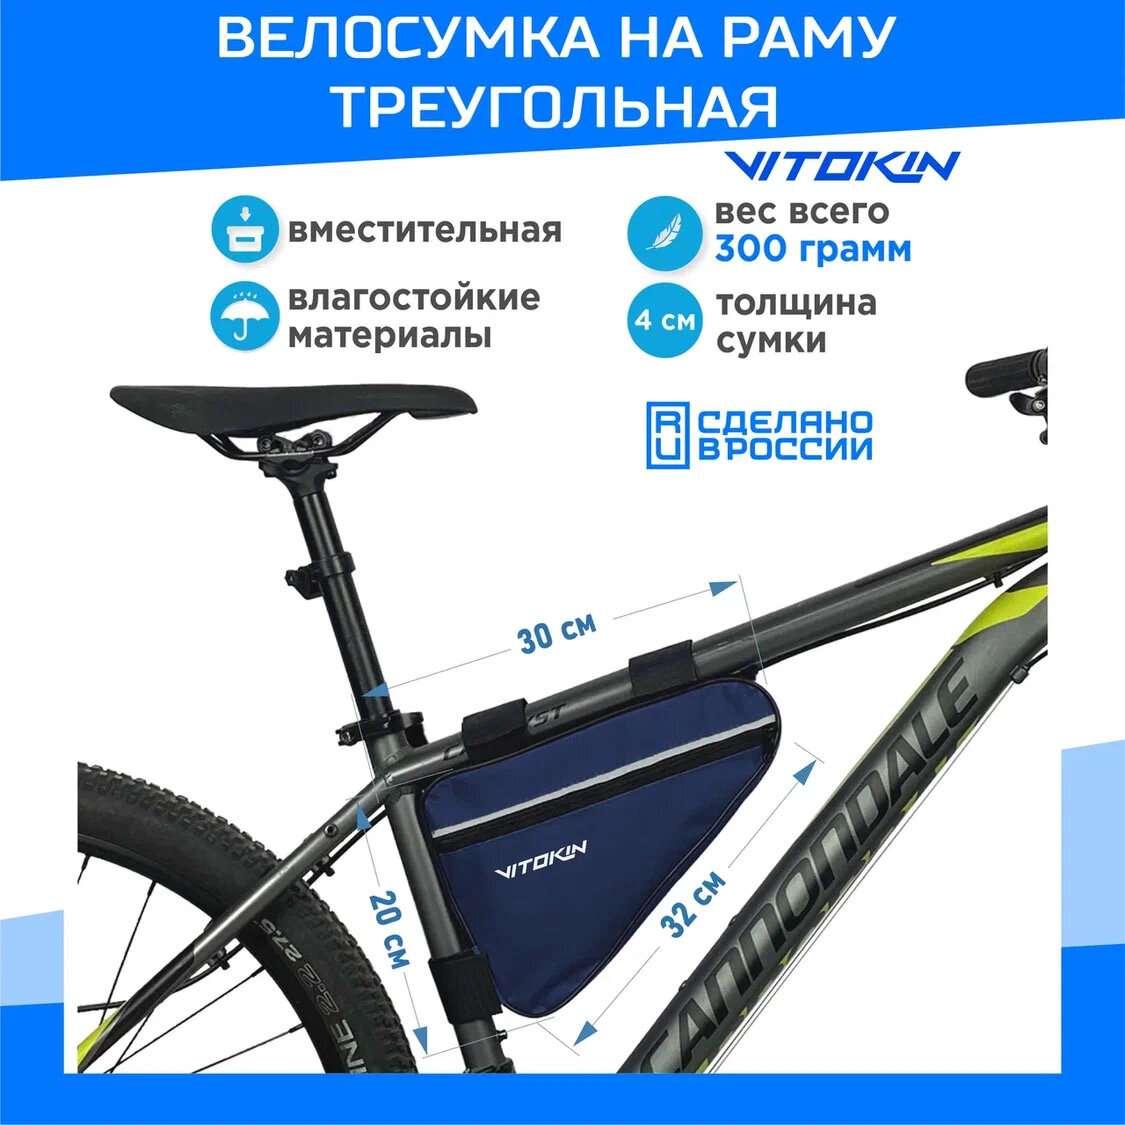 Велосумка под раму велосипеда, сумка велосипедная треугольная VITOKIN, синяя